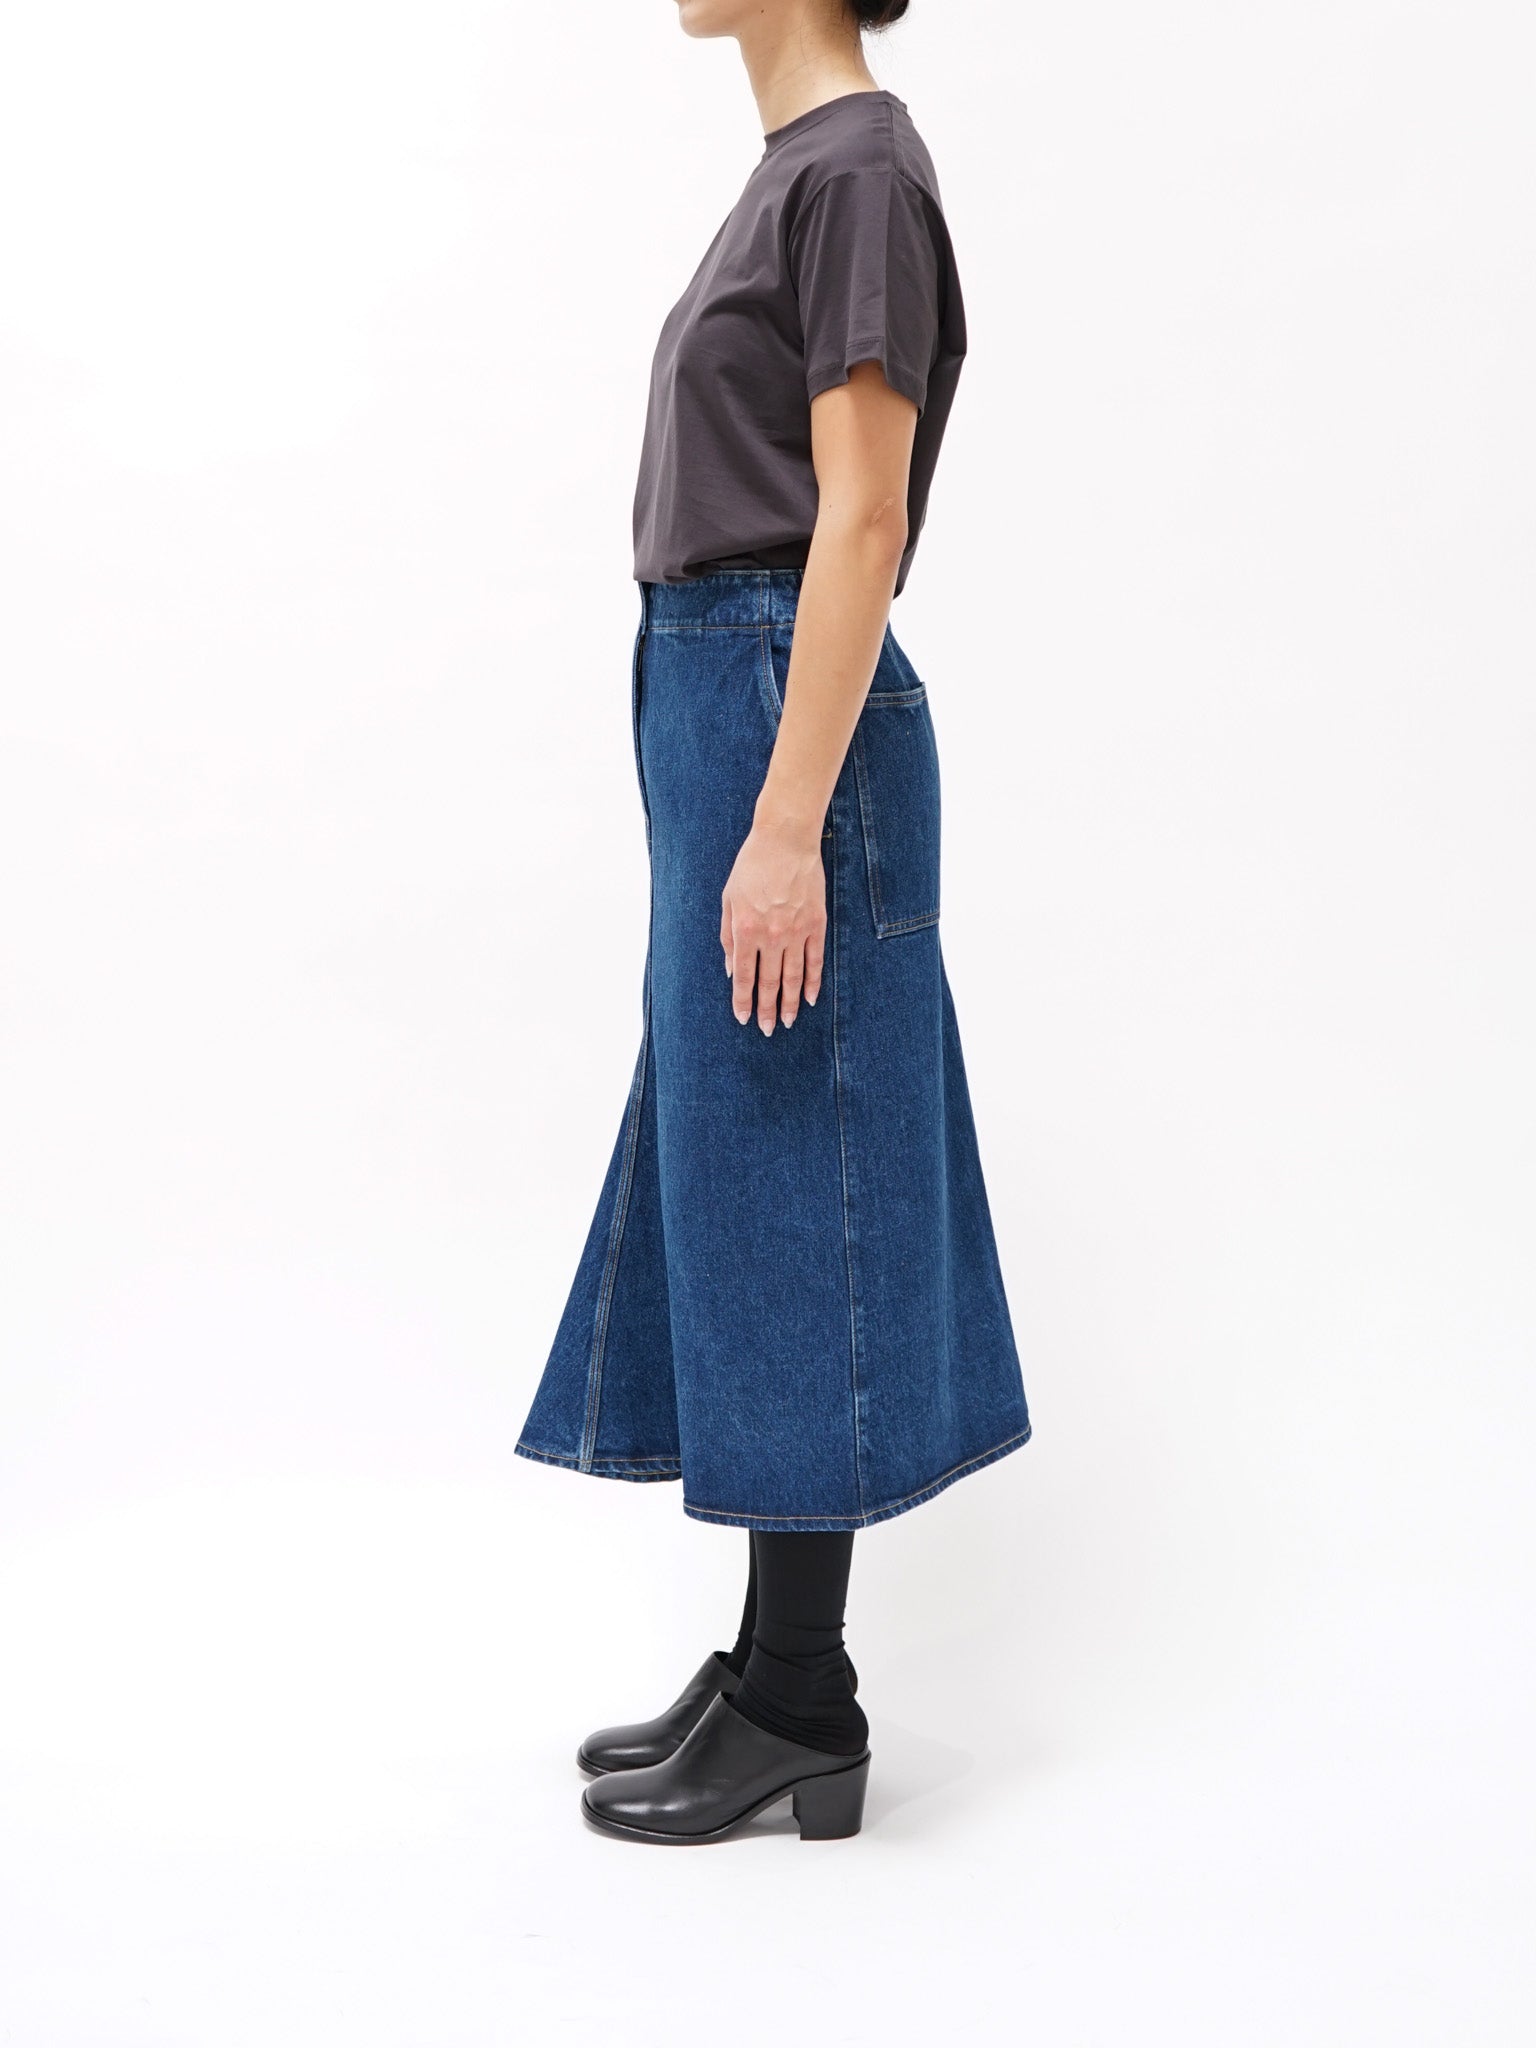 Namu Shop - Studio Nicholson Preto Washed Denim Kick Front Skirt - Indigo Wash